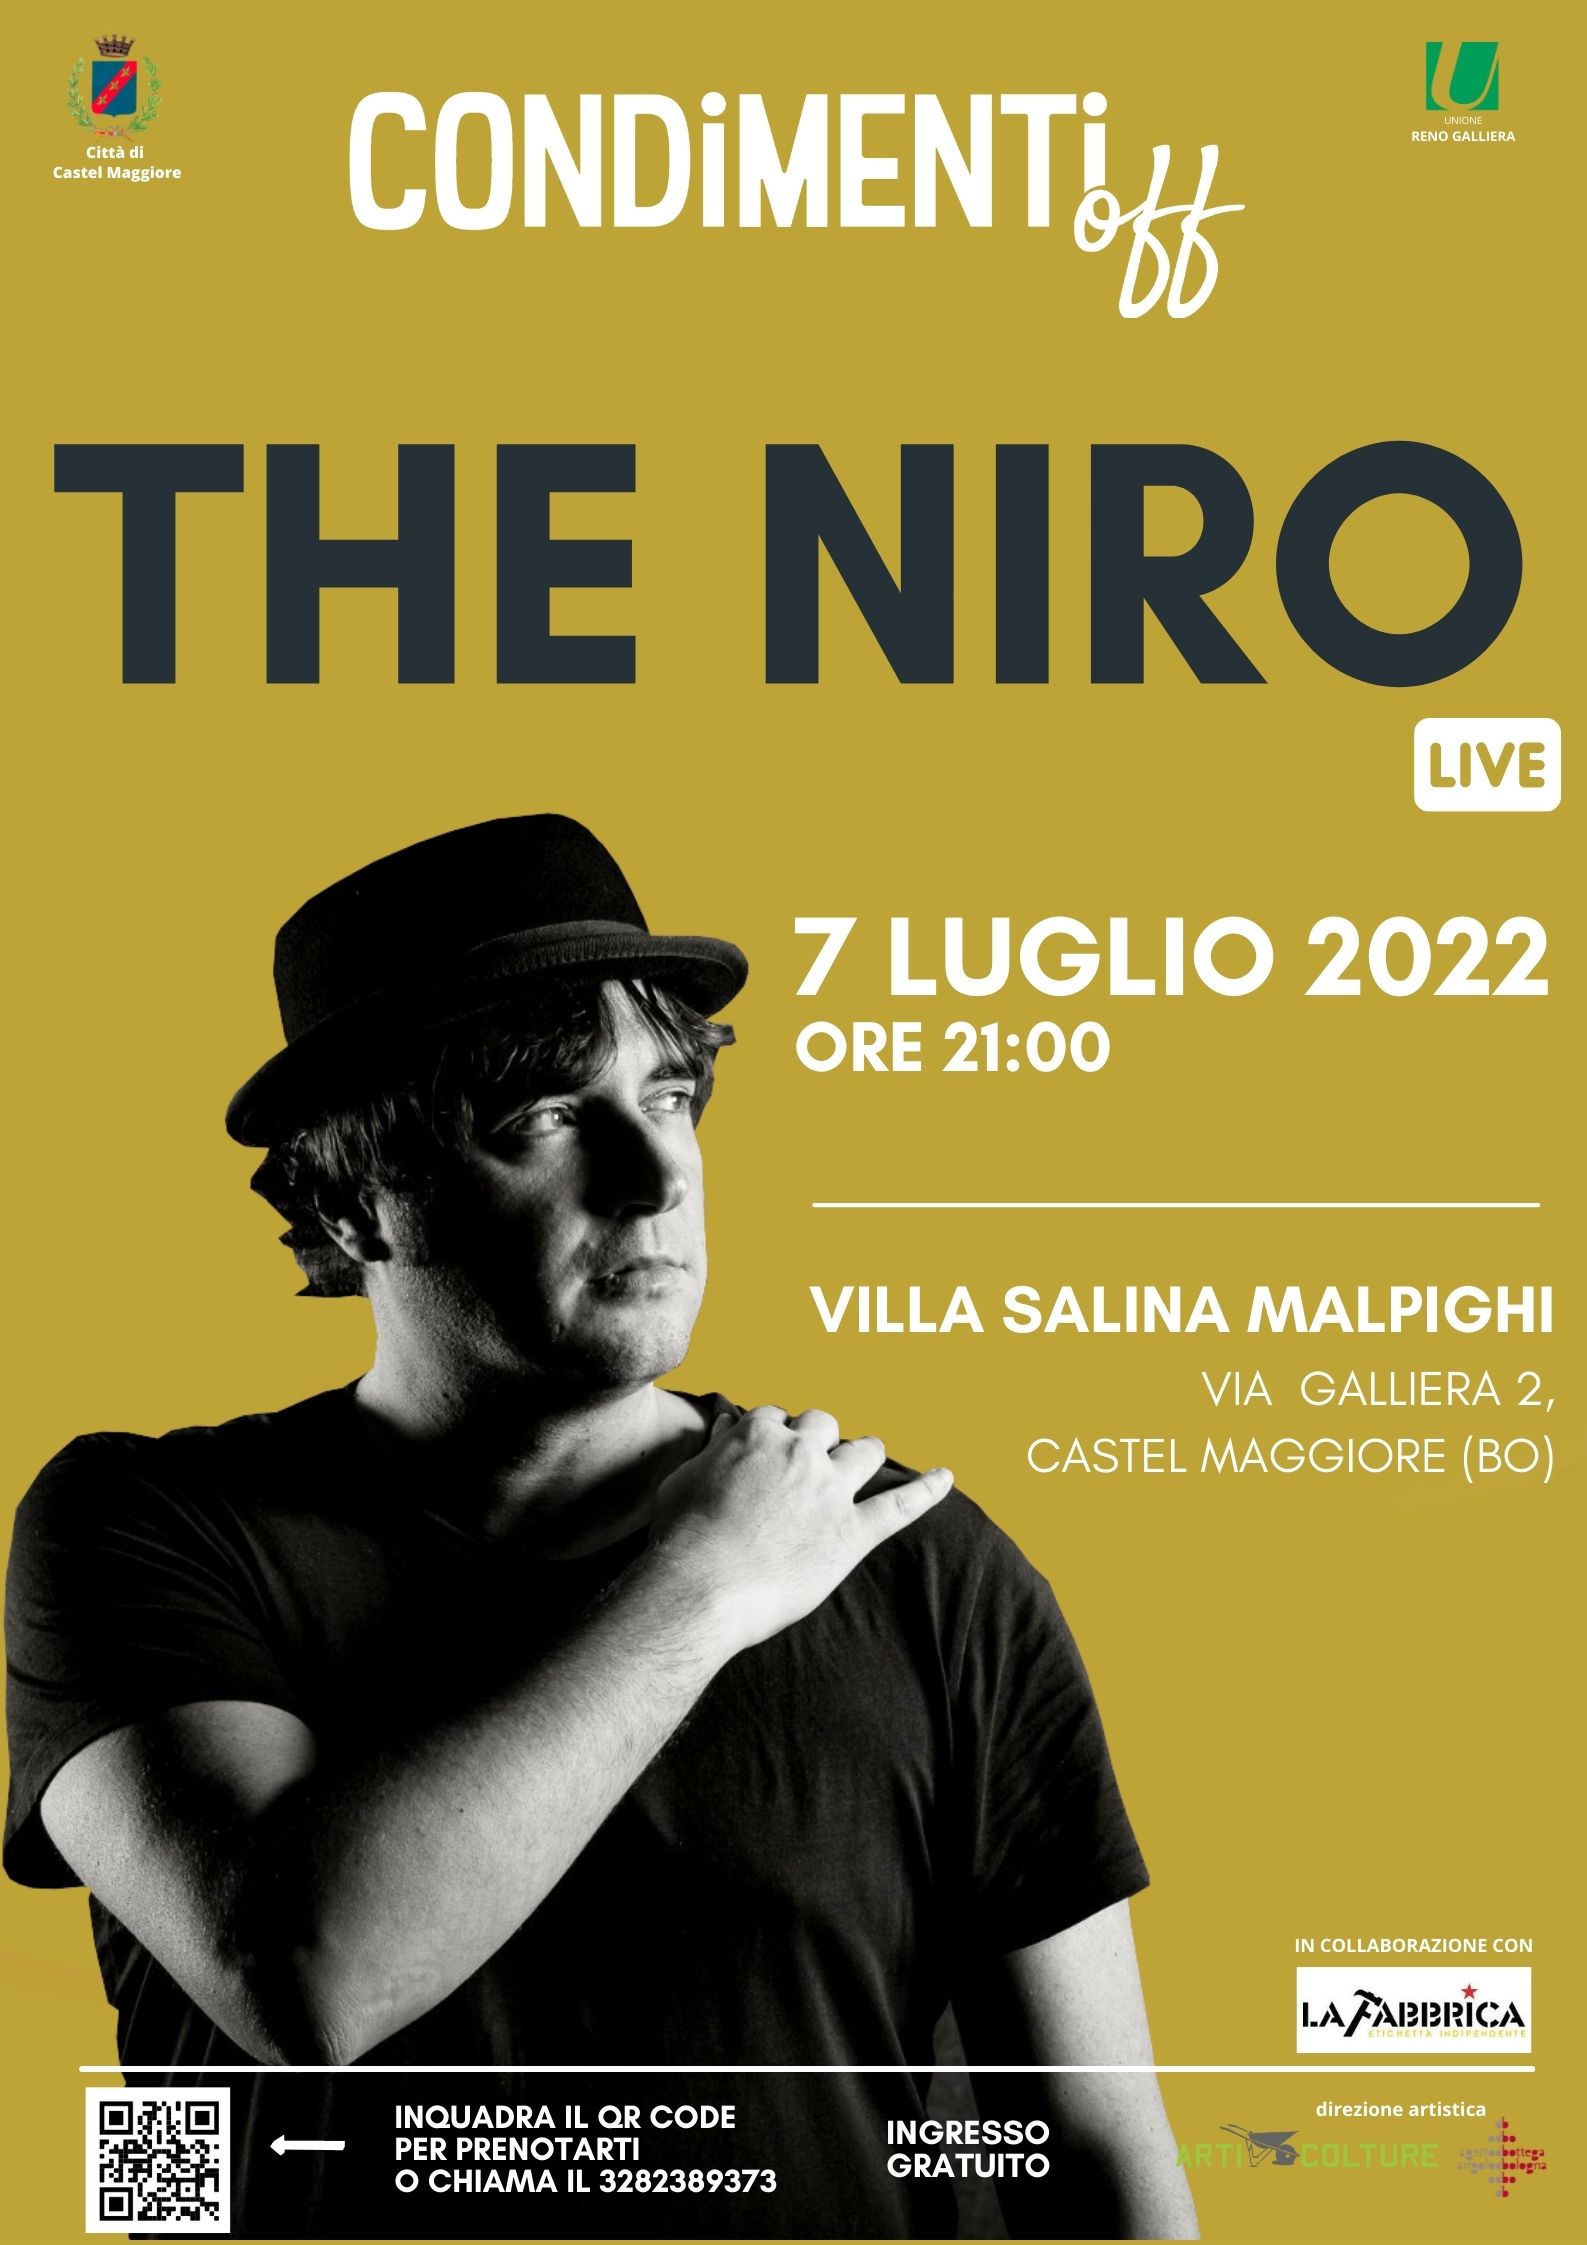 THE NIRO live